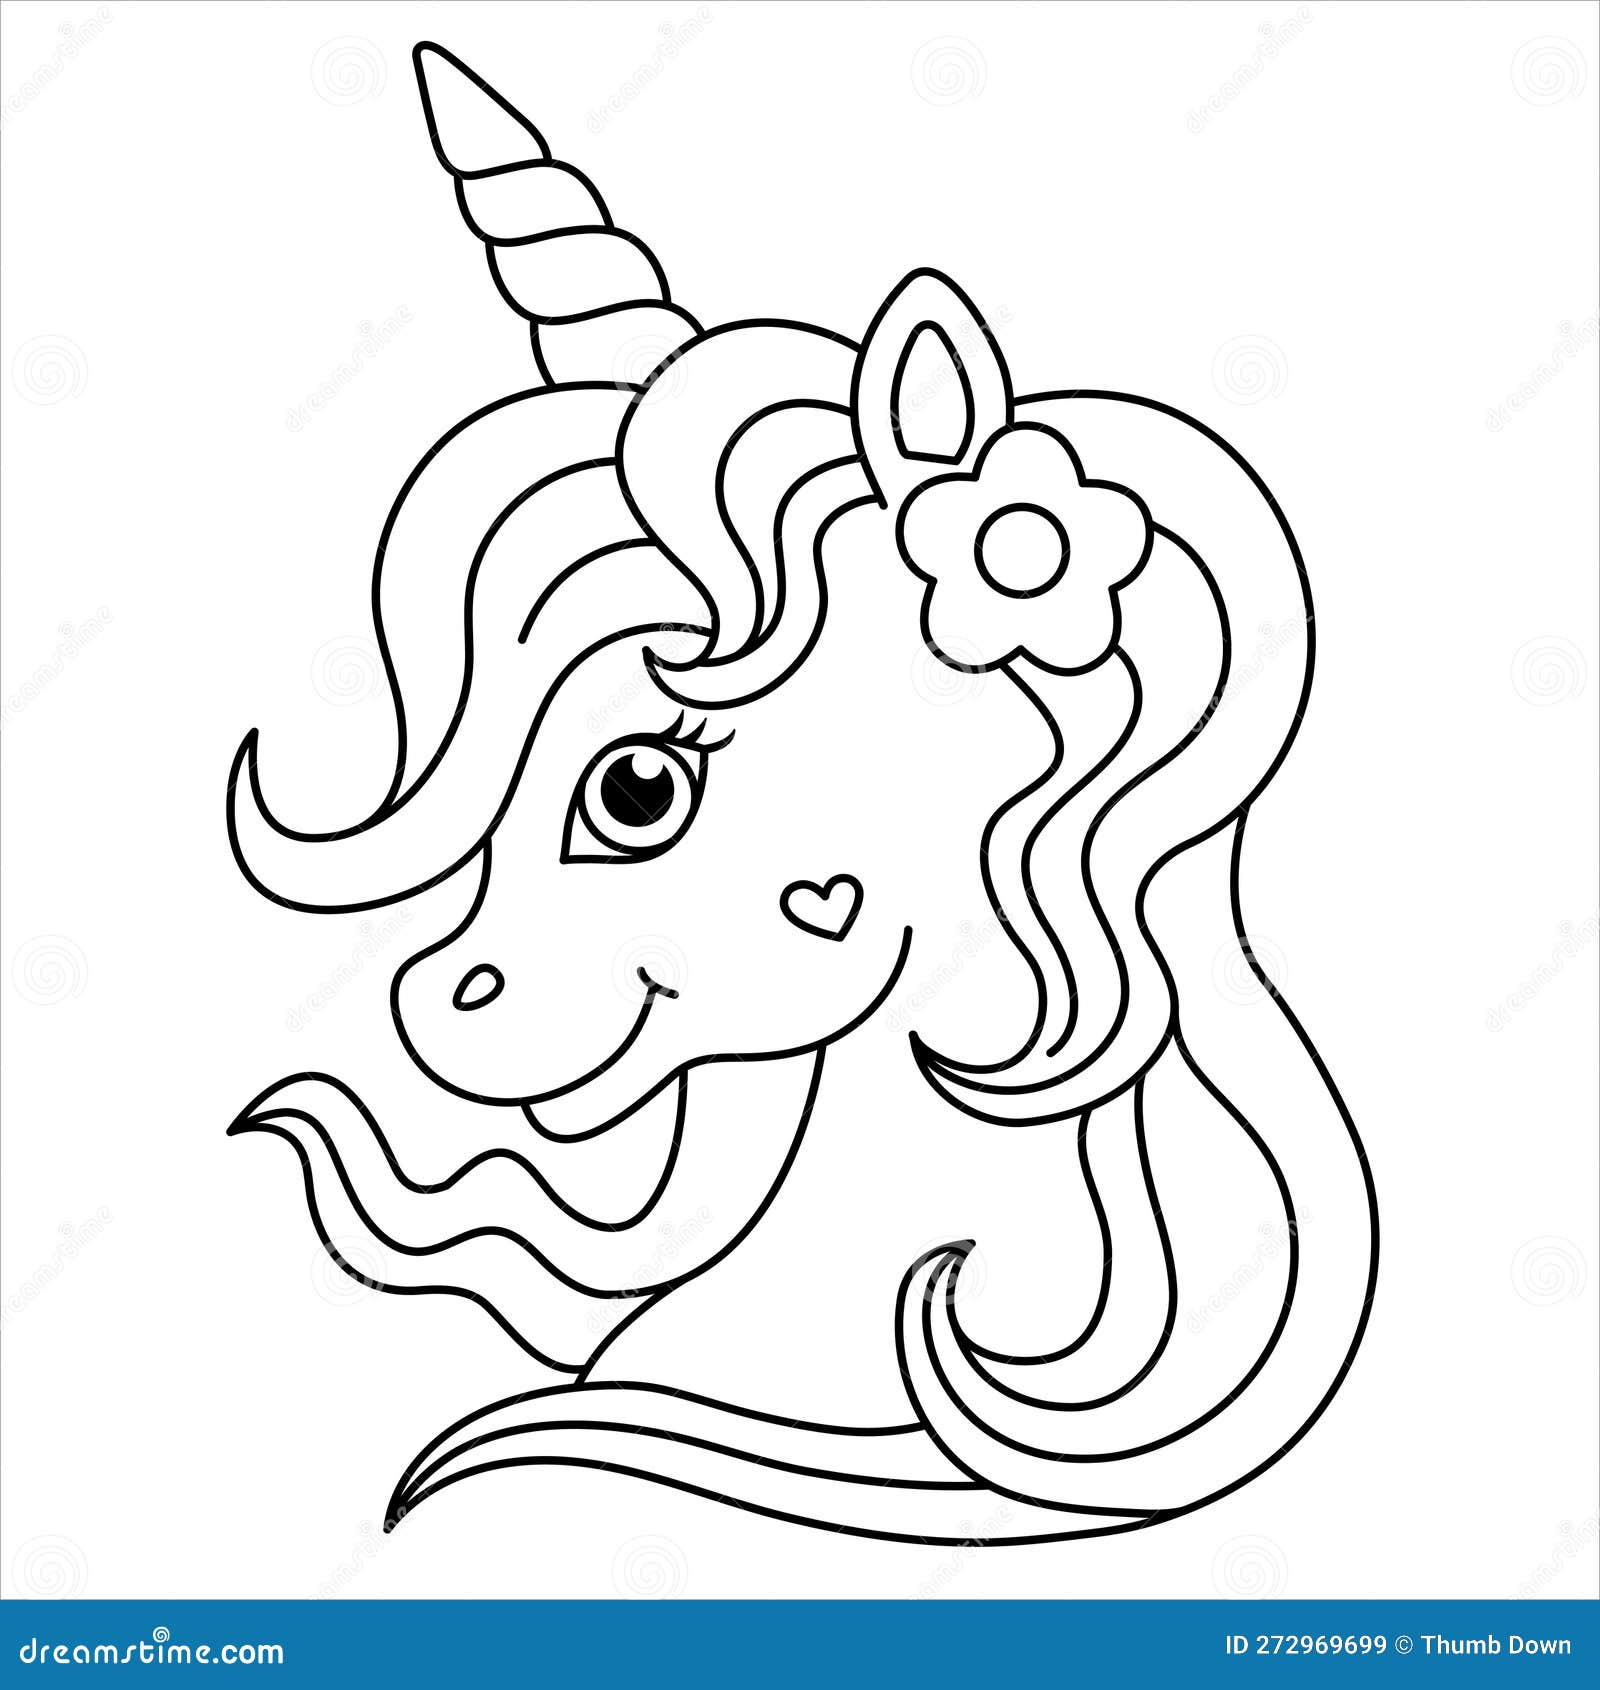 Cute unicorn head coloring page magical unicorn illustration for children stock vector